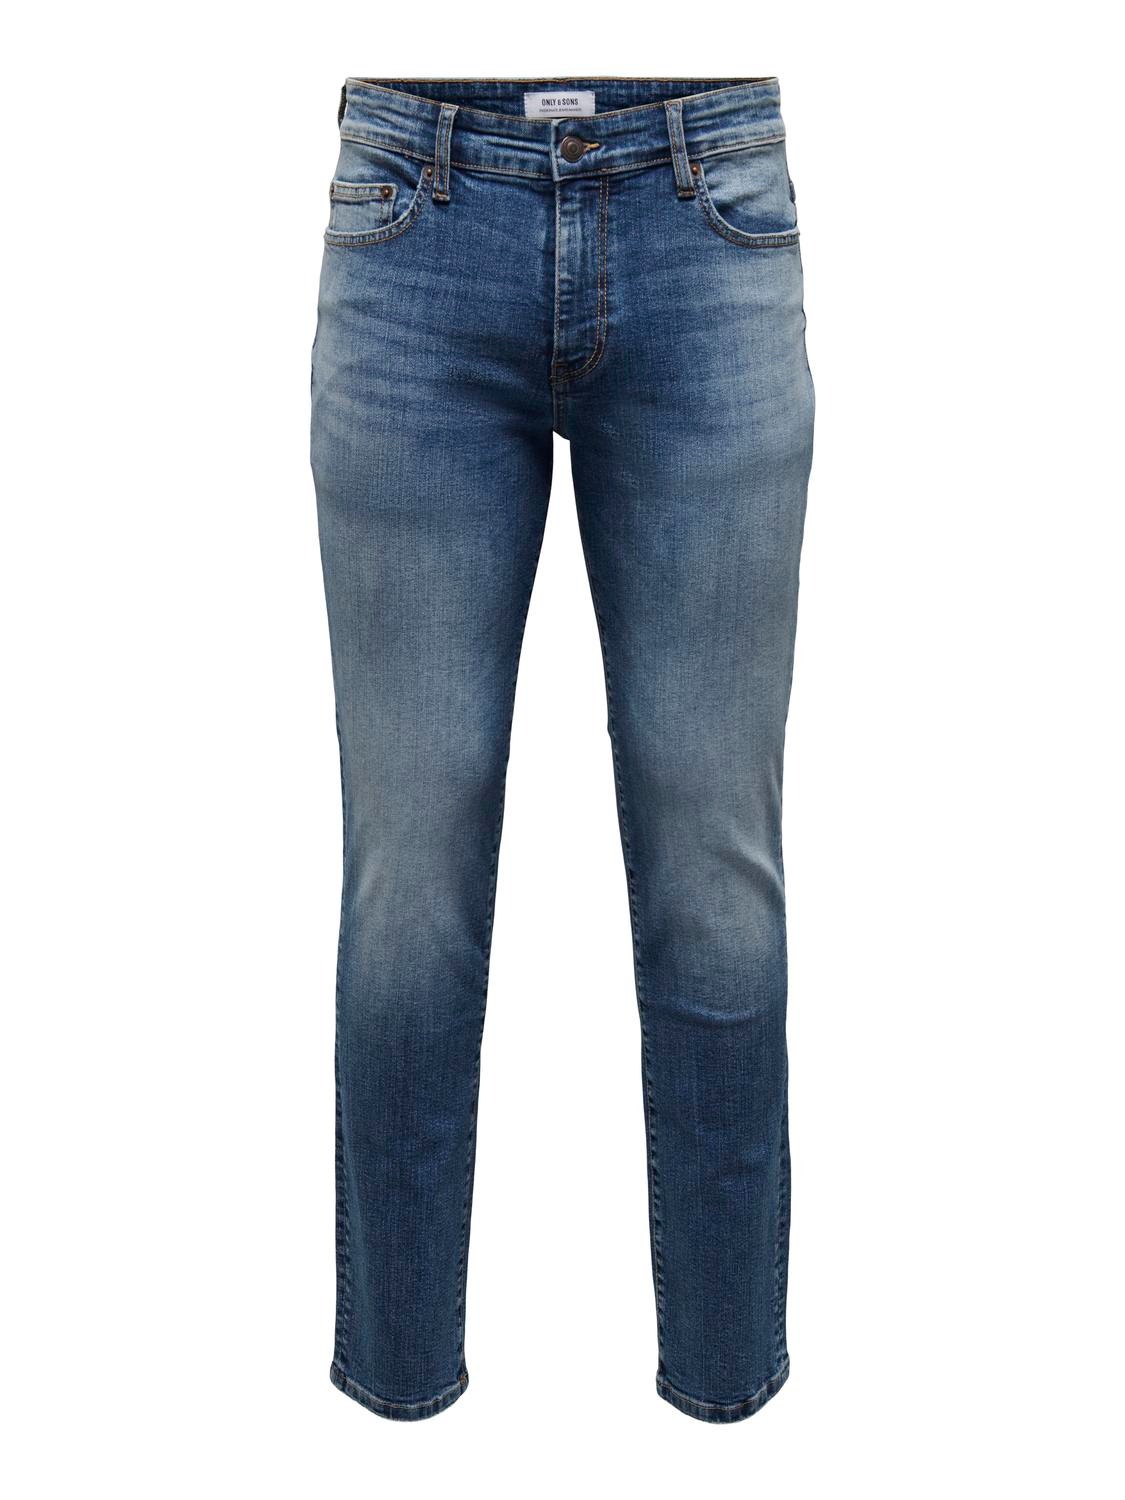 ONLY & SONS Slim Fit Mid rise Jeans -Medium Blue Denim - 22026466